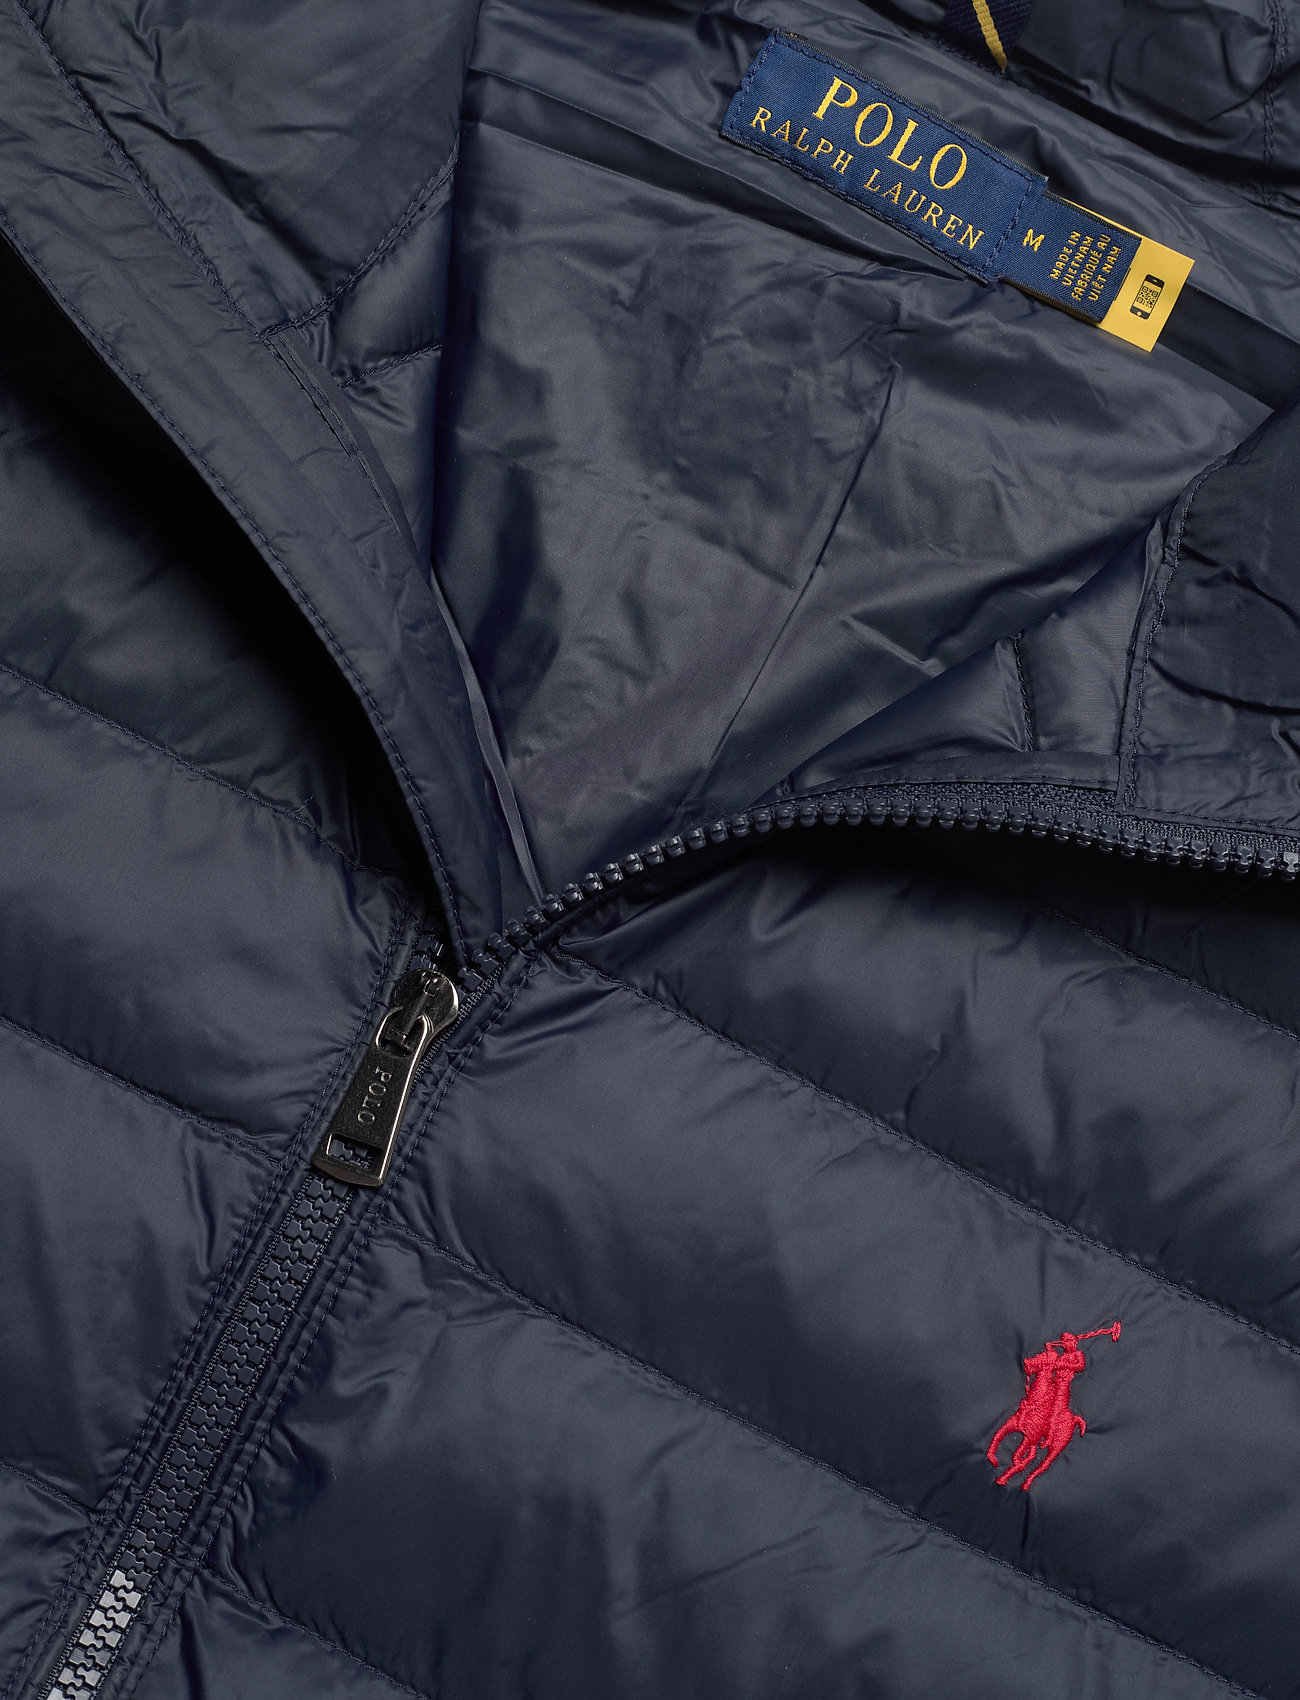 Polo Ralph Lauren - The Packable Jacket - paminkštintosios striukės - collection navy - 3